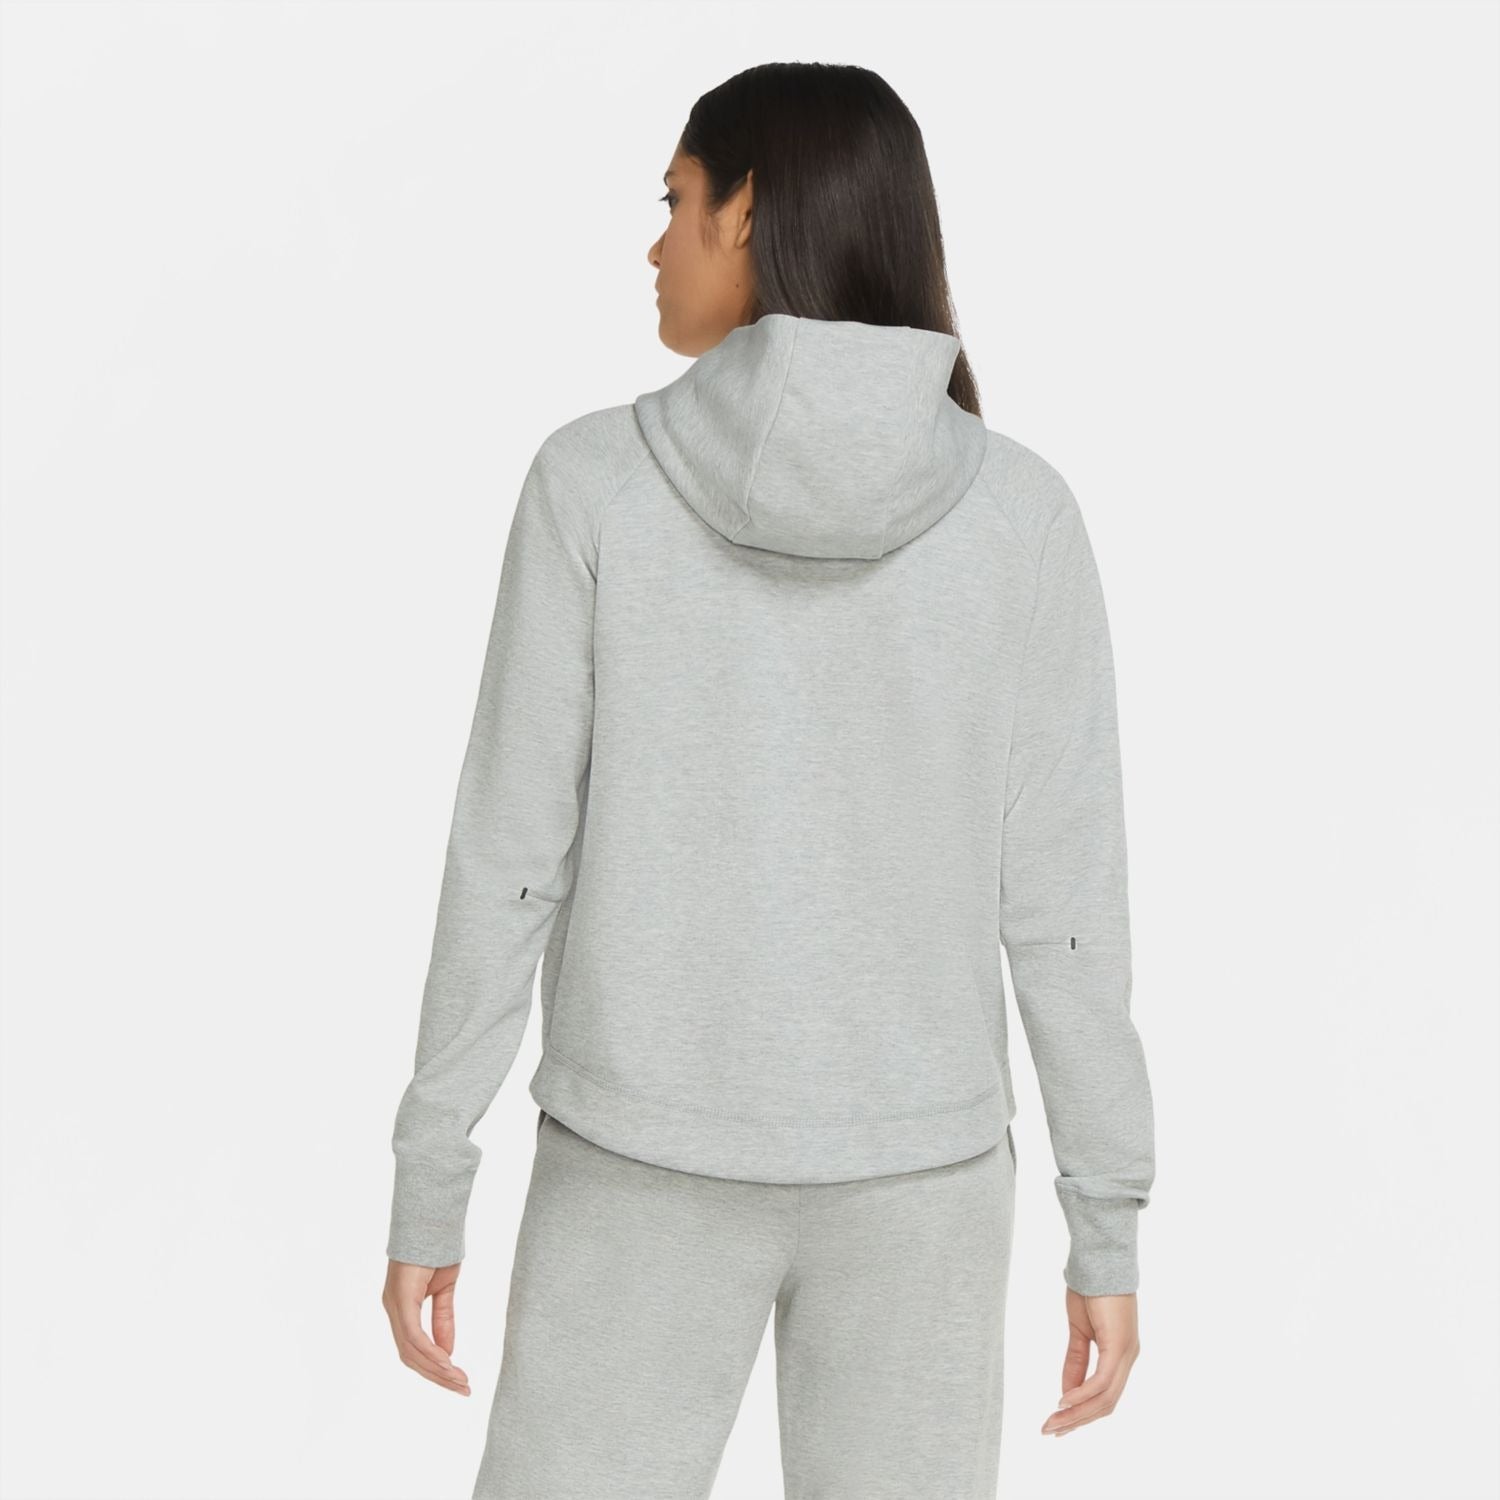 Nike Women's Sportswear Tech Fleece Windrunner Tracksuit - Color: Grey Heather - Tops and Bottoms USA -